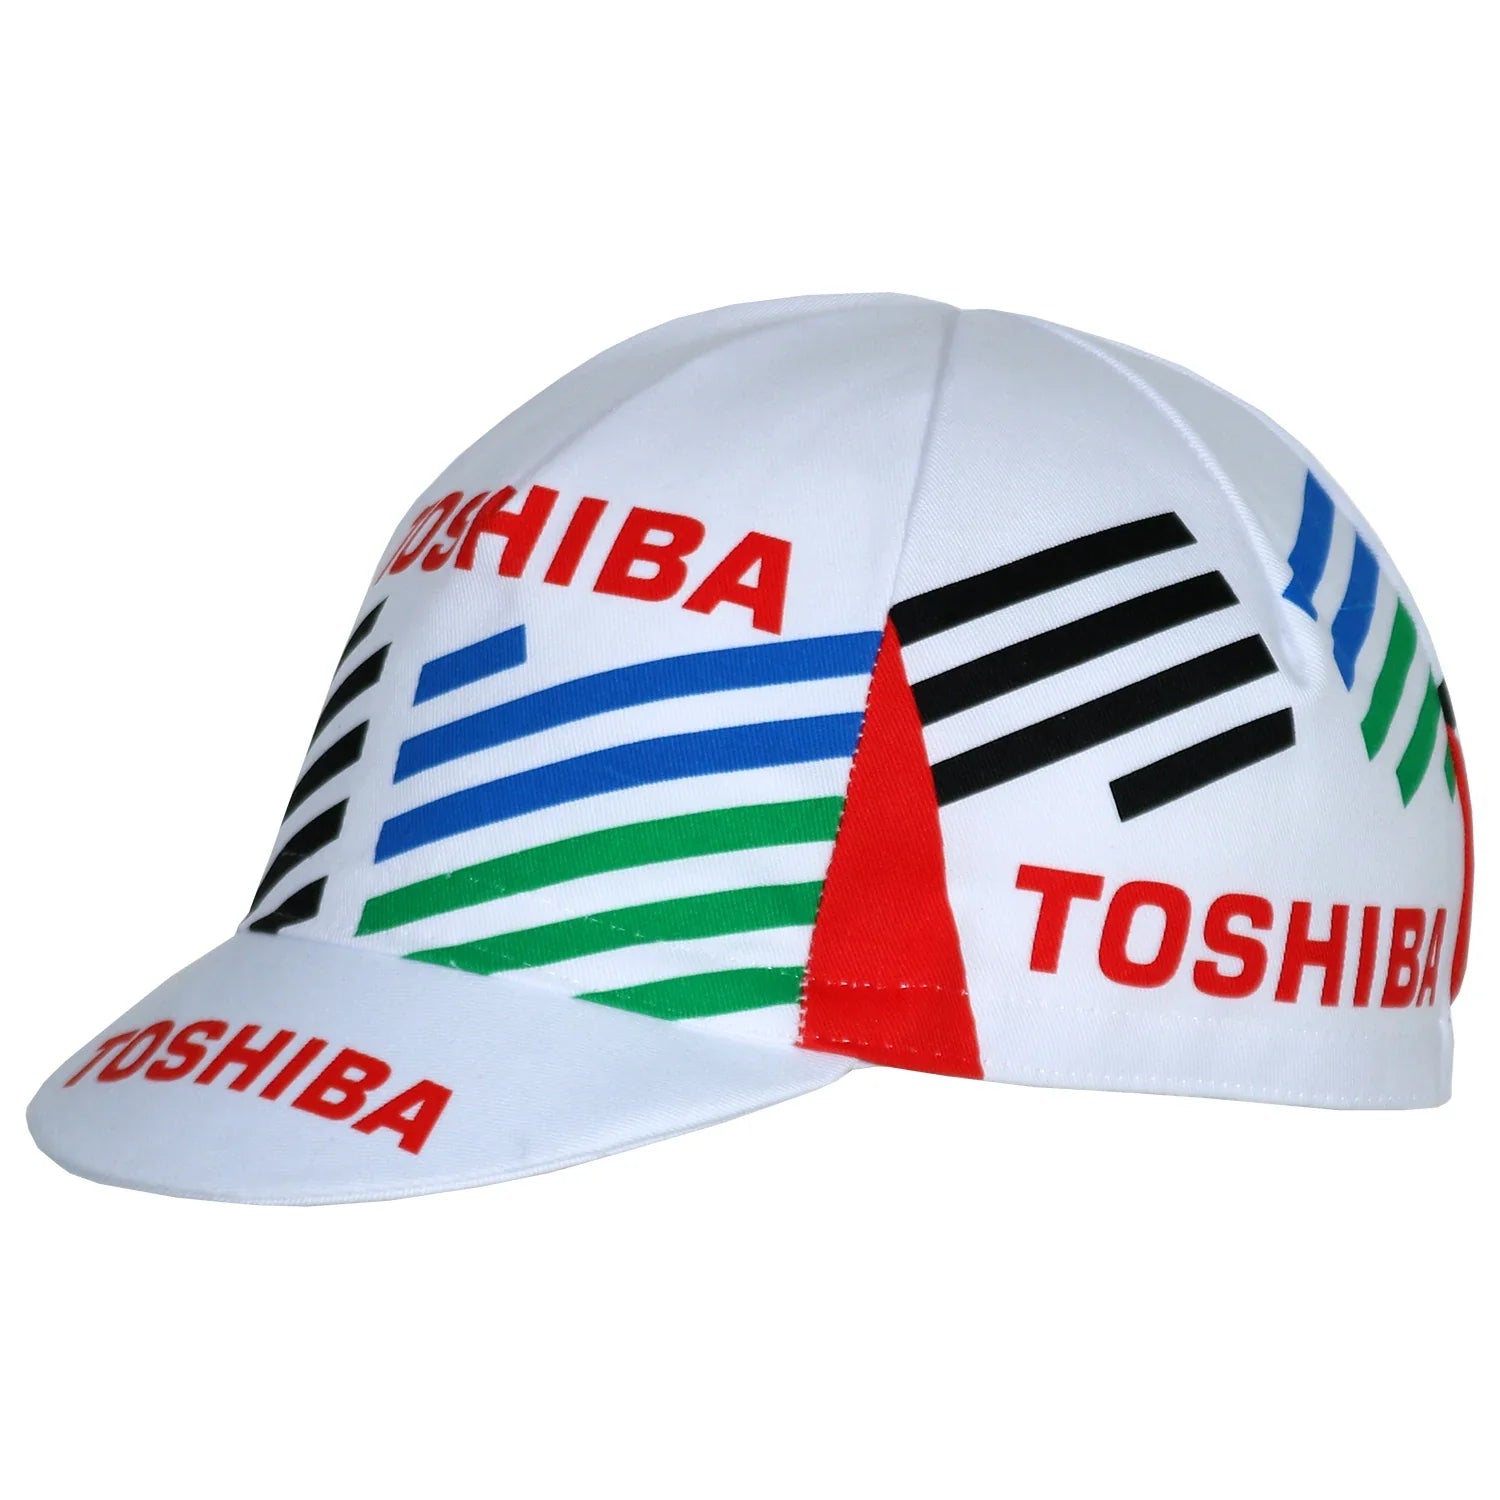 Toshiba 1990 Retro Cycling Cap